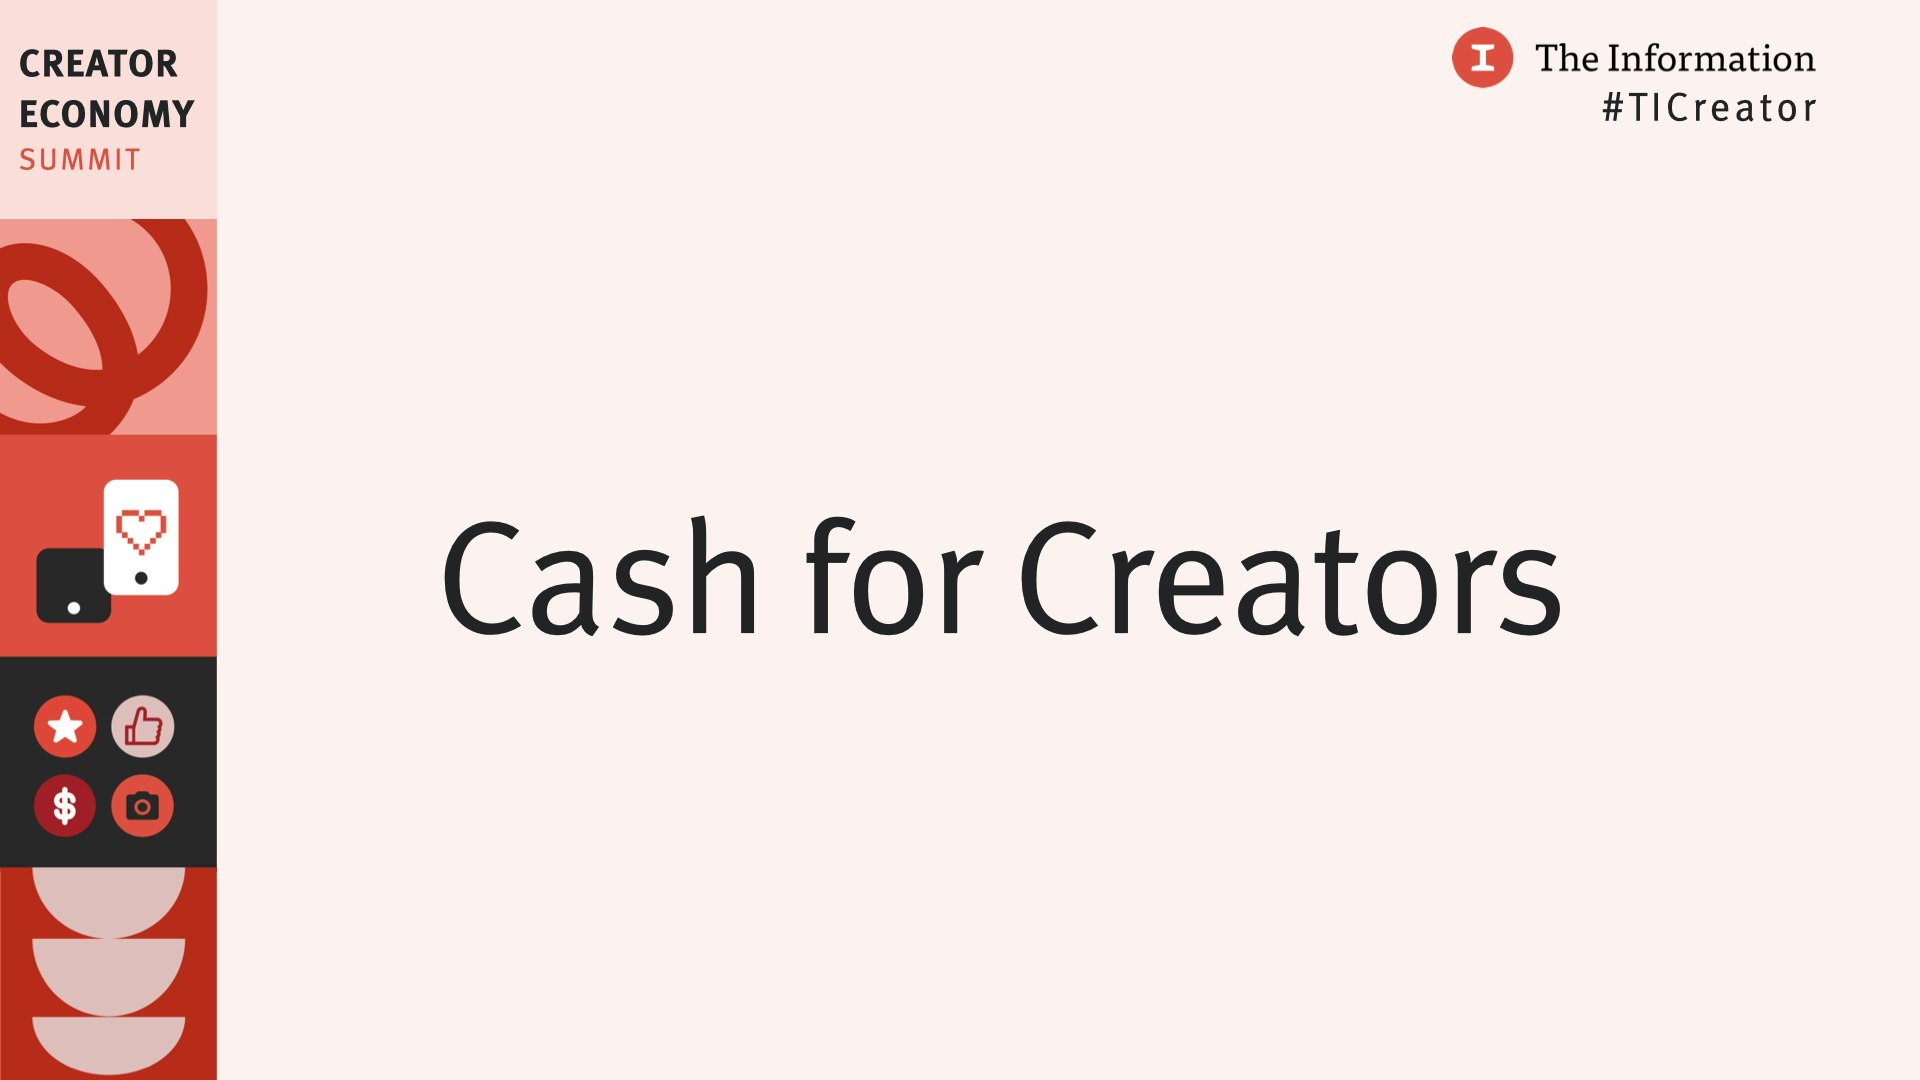 Creator Economy Summit 2021 - Cash for Creators